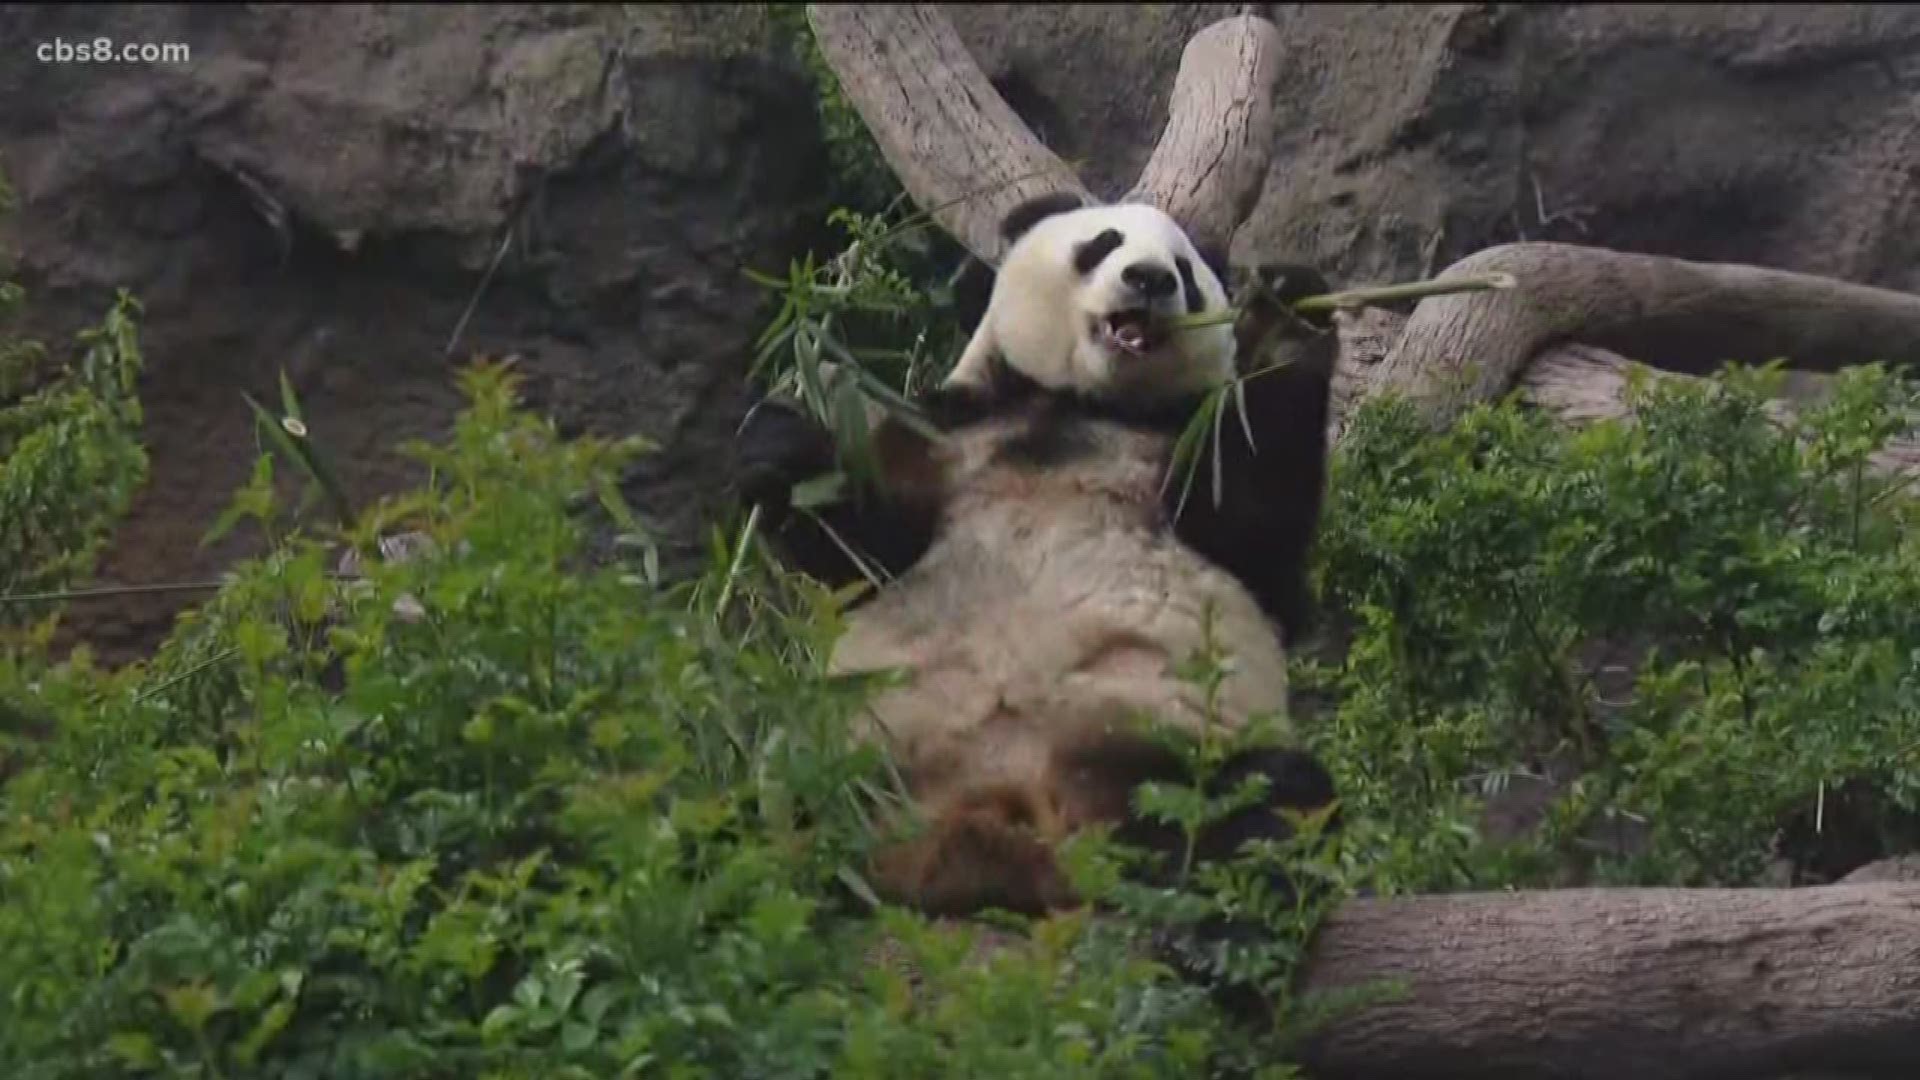 China could send new pandas to San Diego Zoo | cbs8.com